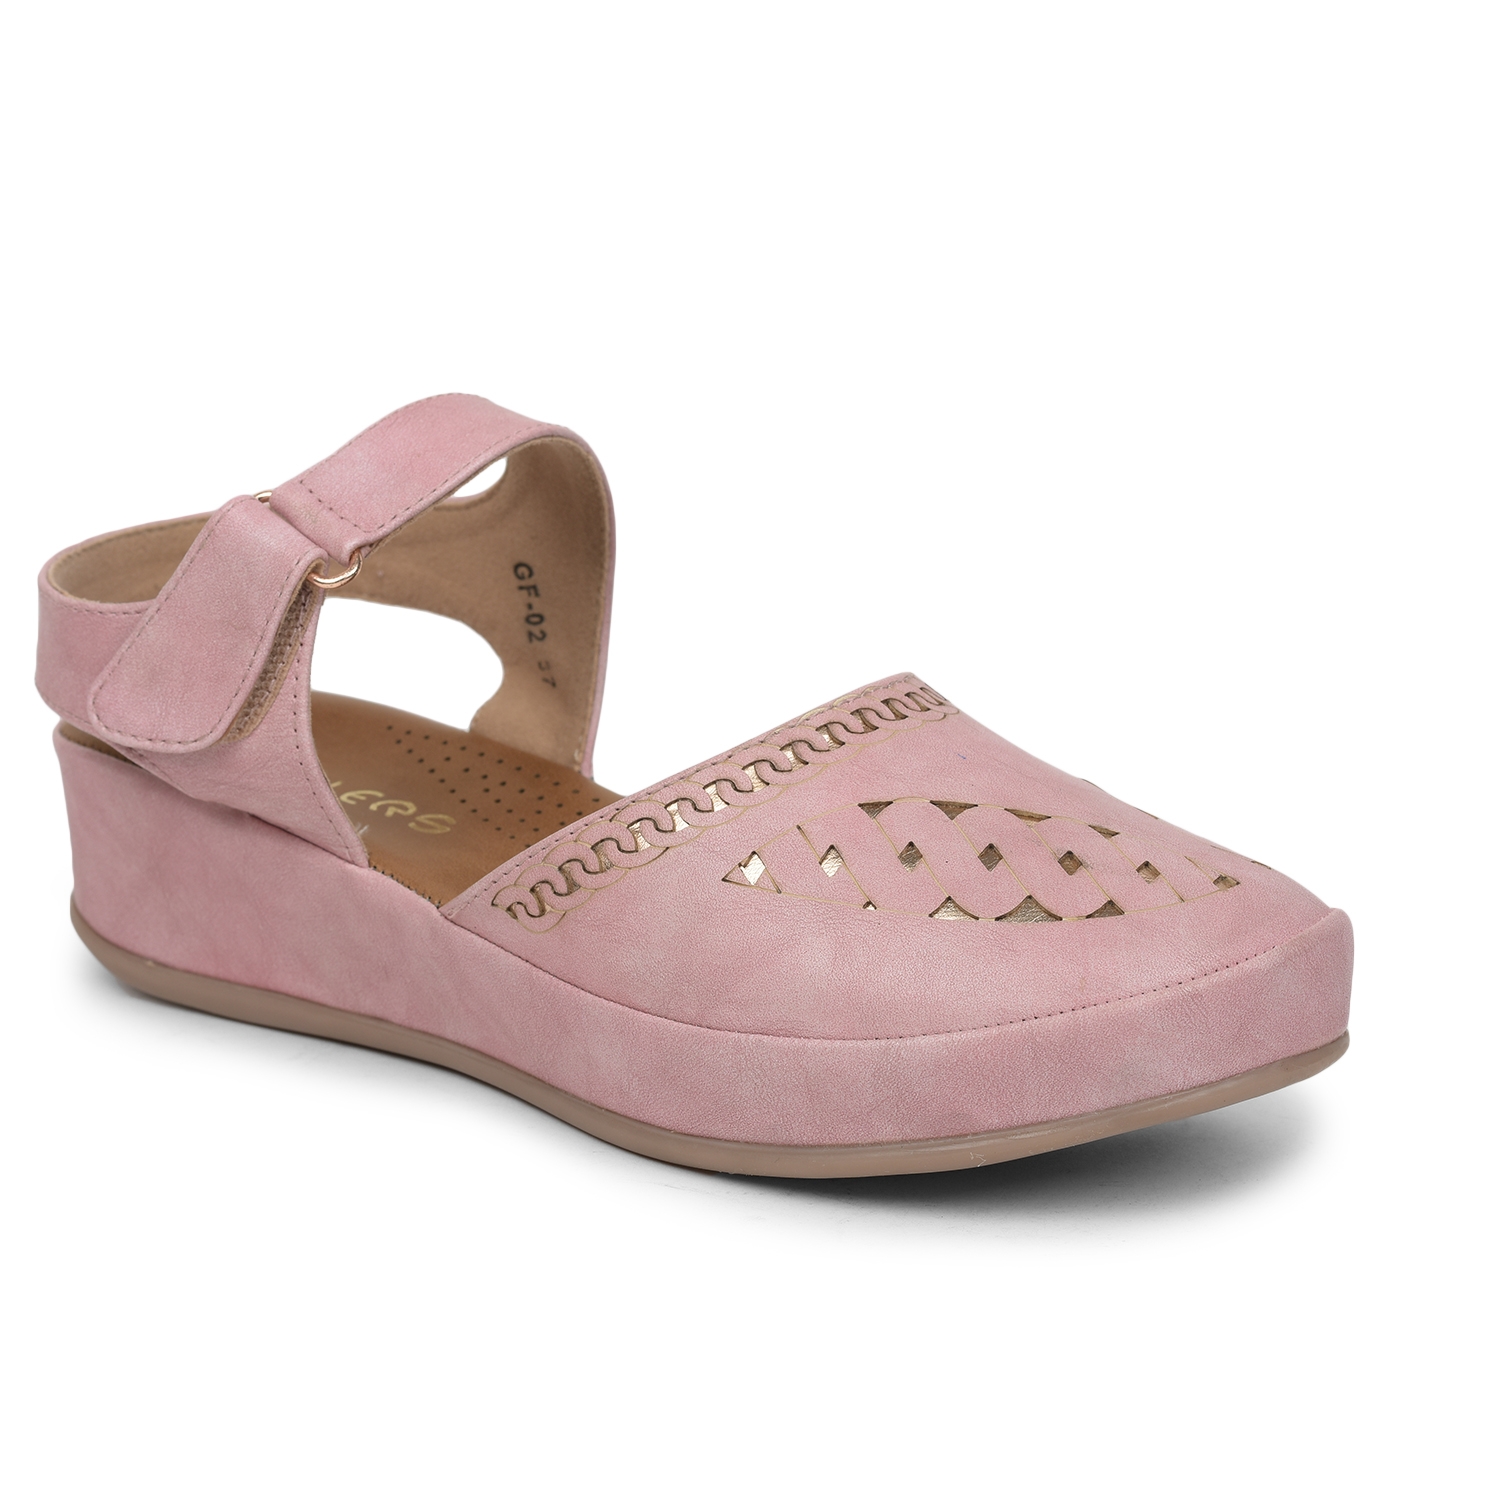 Liberty | Liberty Healers Pink Sandals GF-02 For :- Women